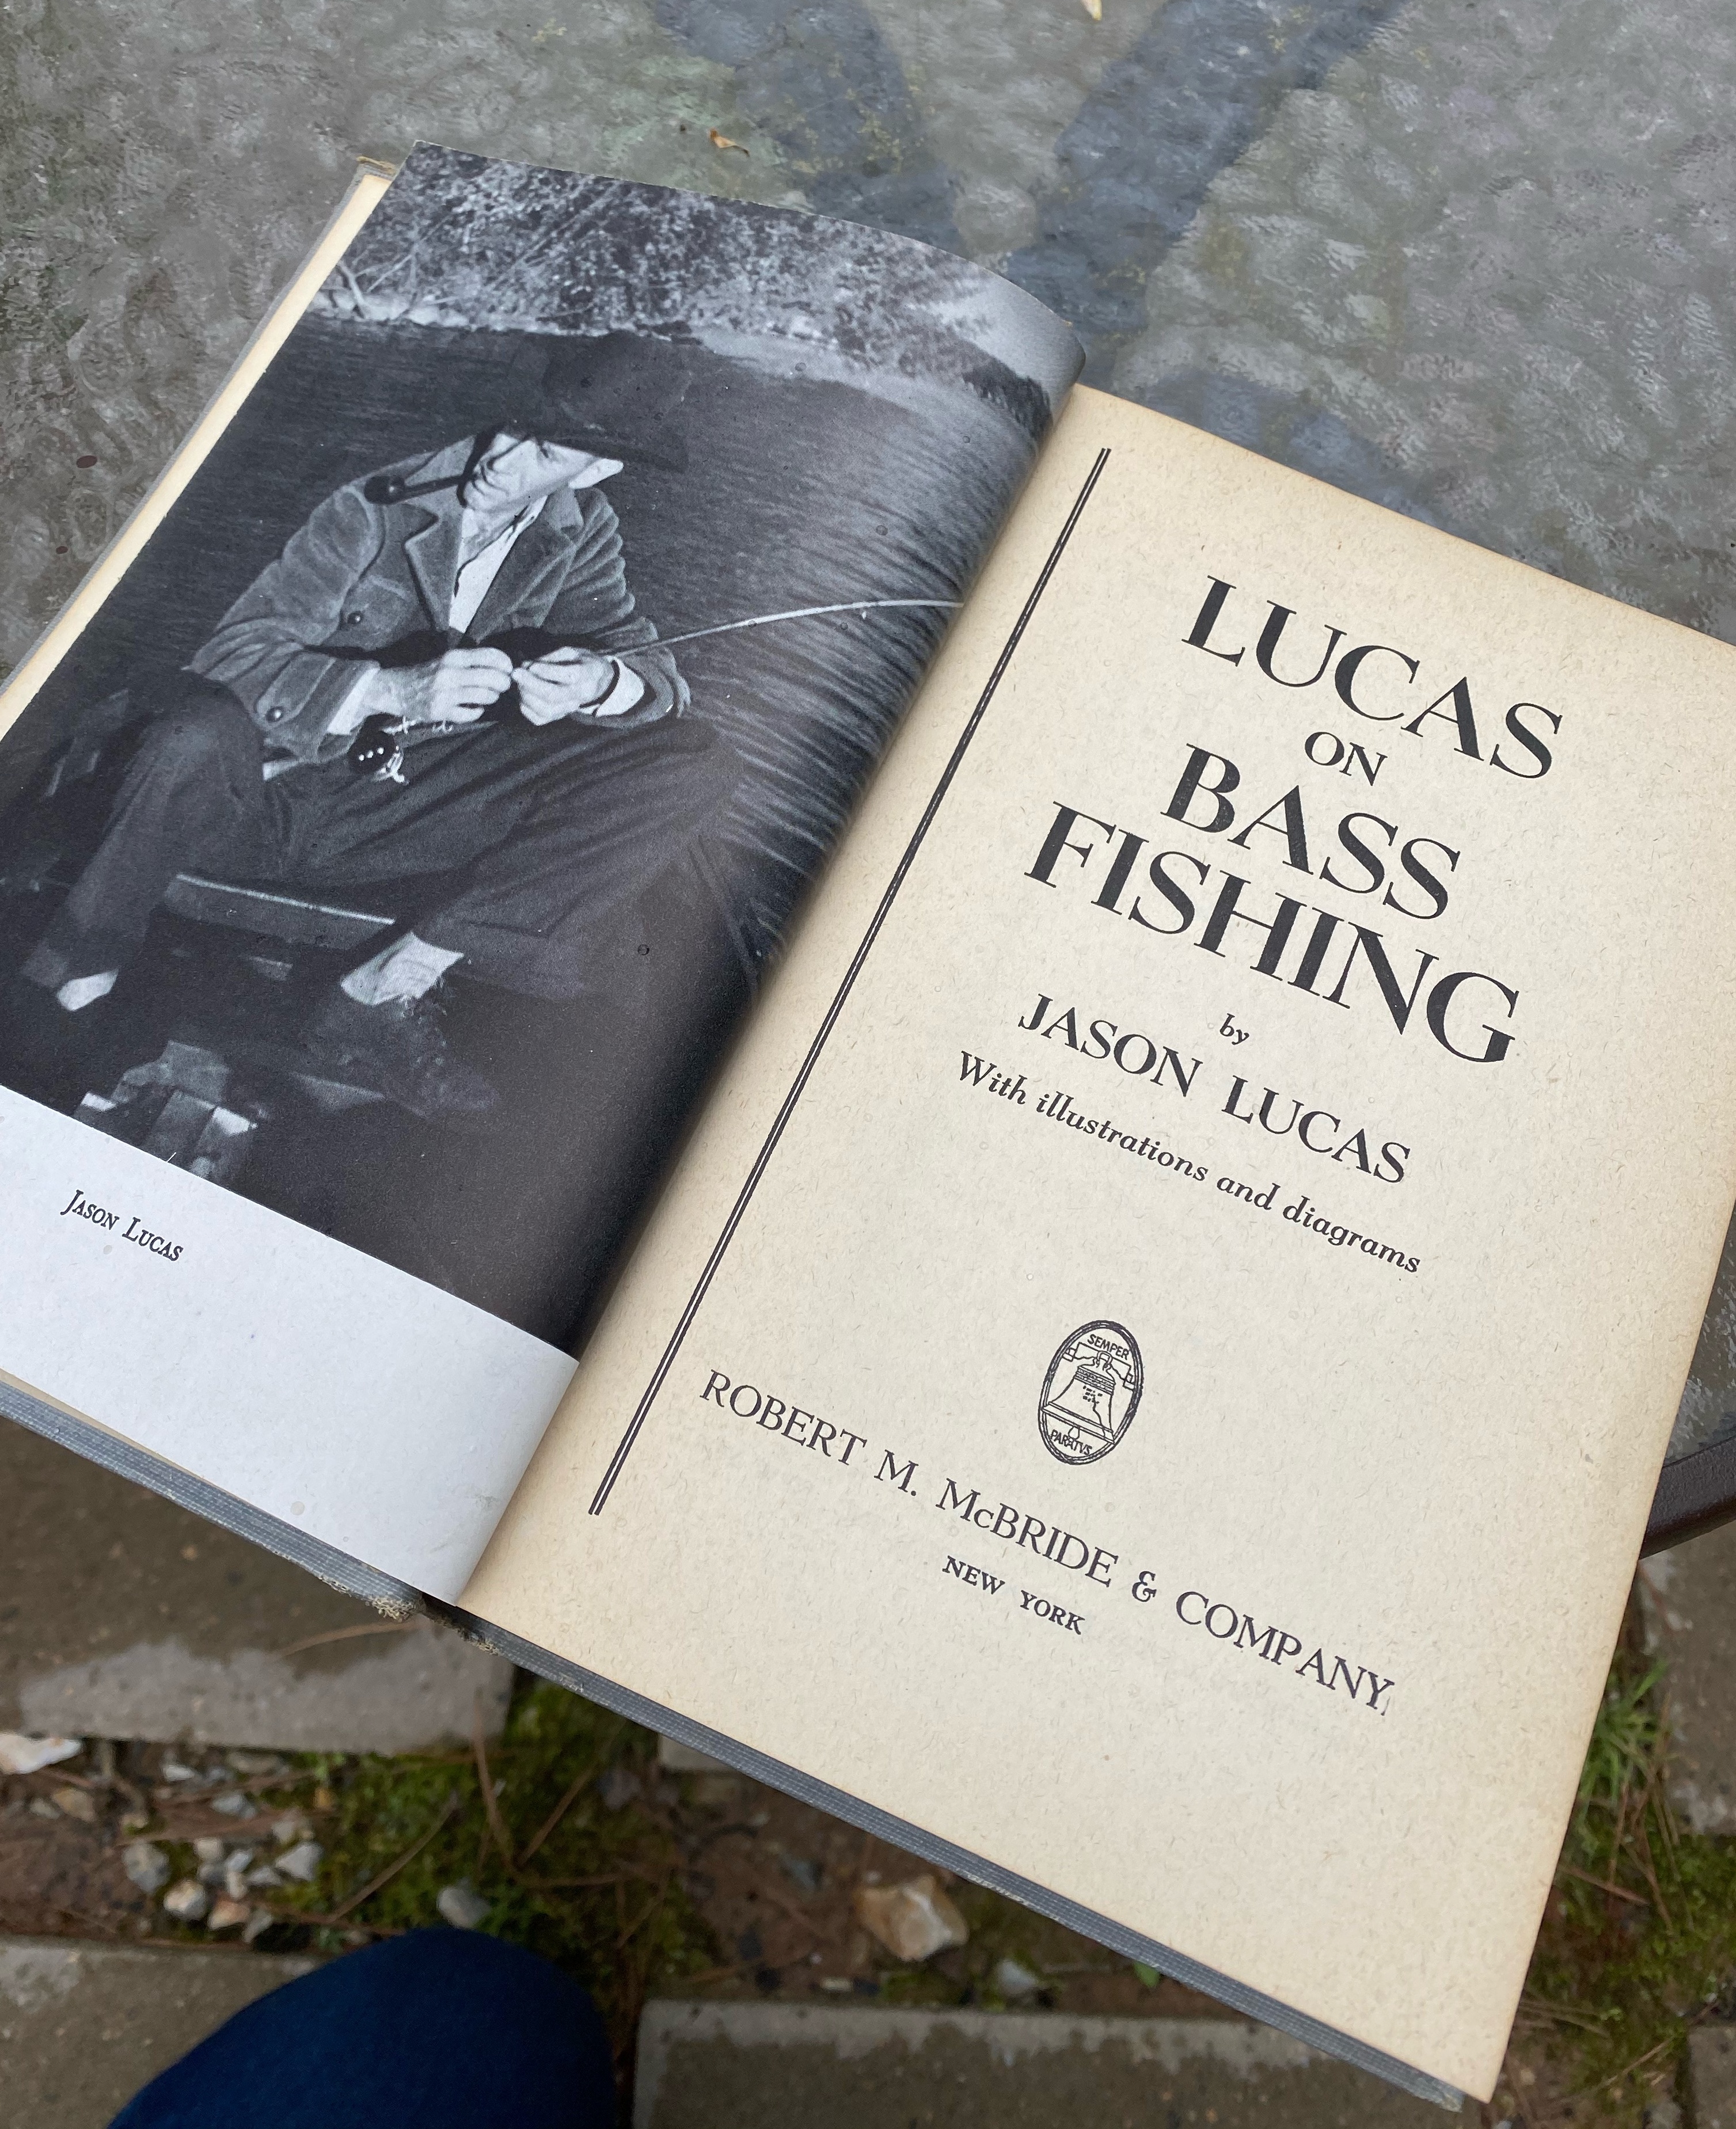 https://www.bassfishinghof.com/wp-content/uploads/2021/04/jason-lucas-book-1.jpeg